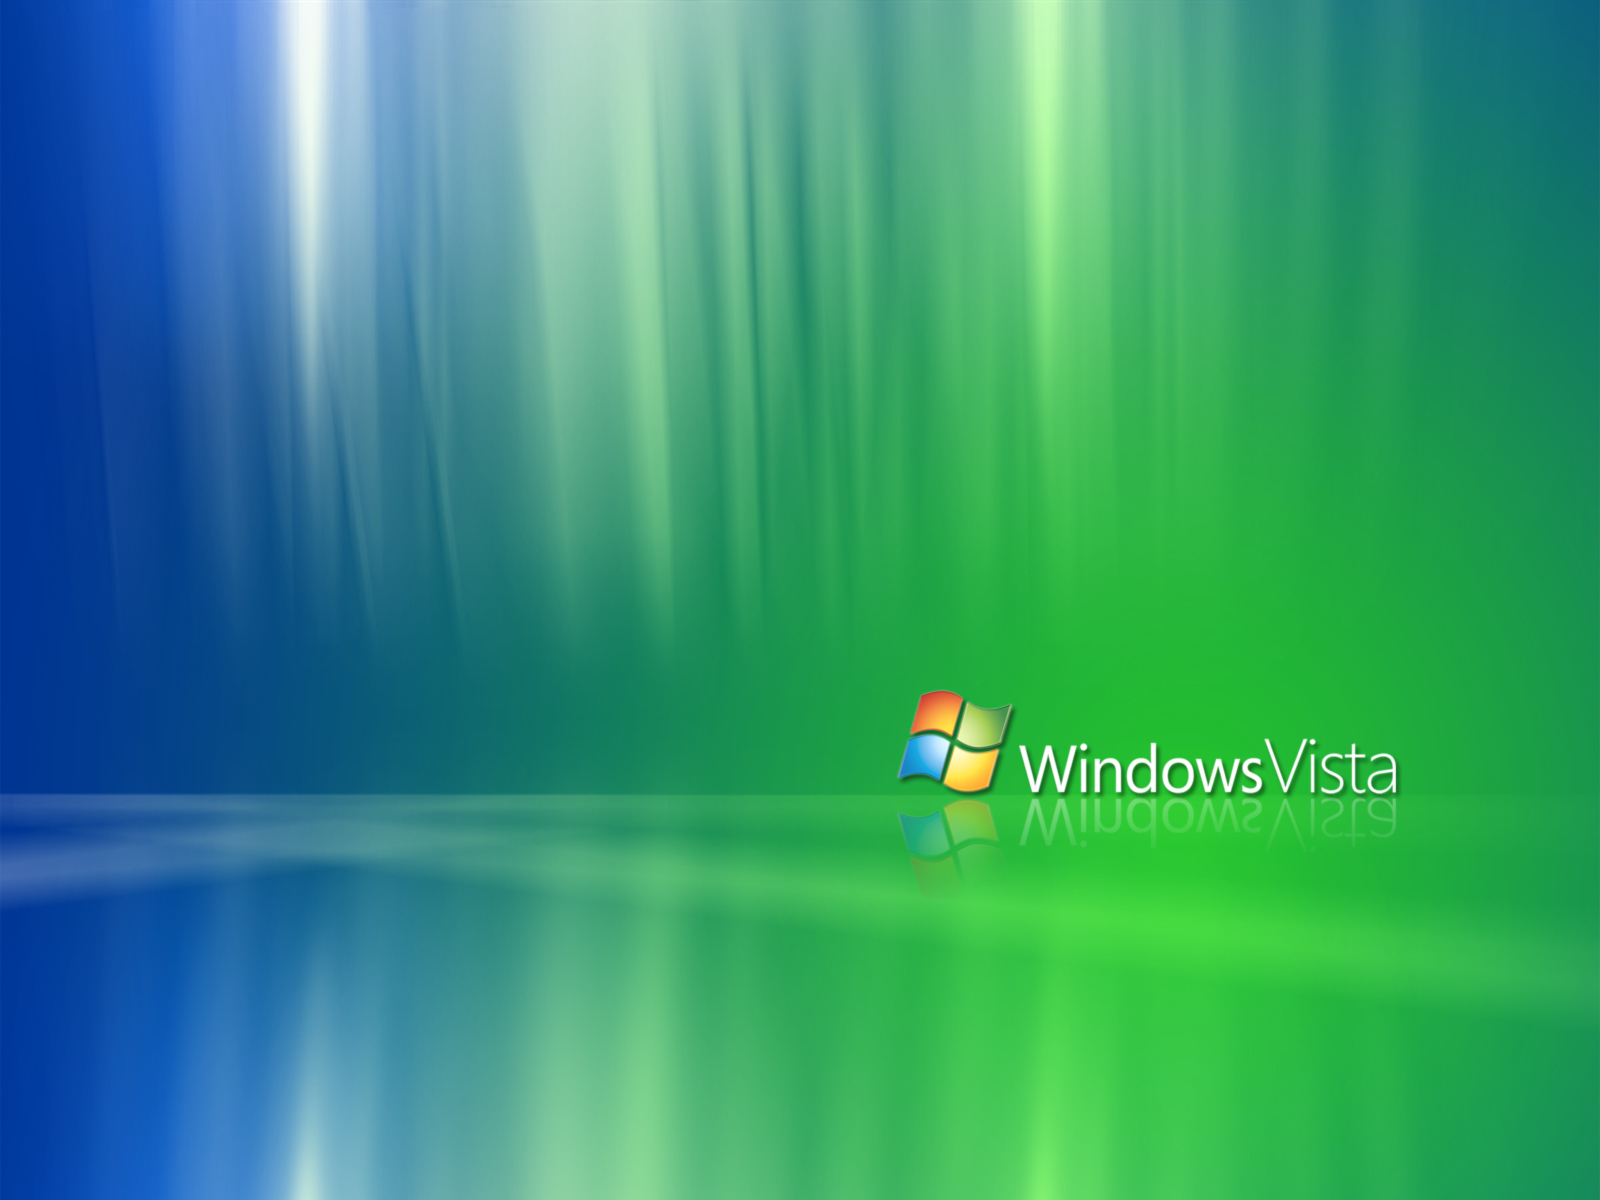 windows vista wallpaper,green,blue,operating system,azure,animation